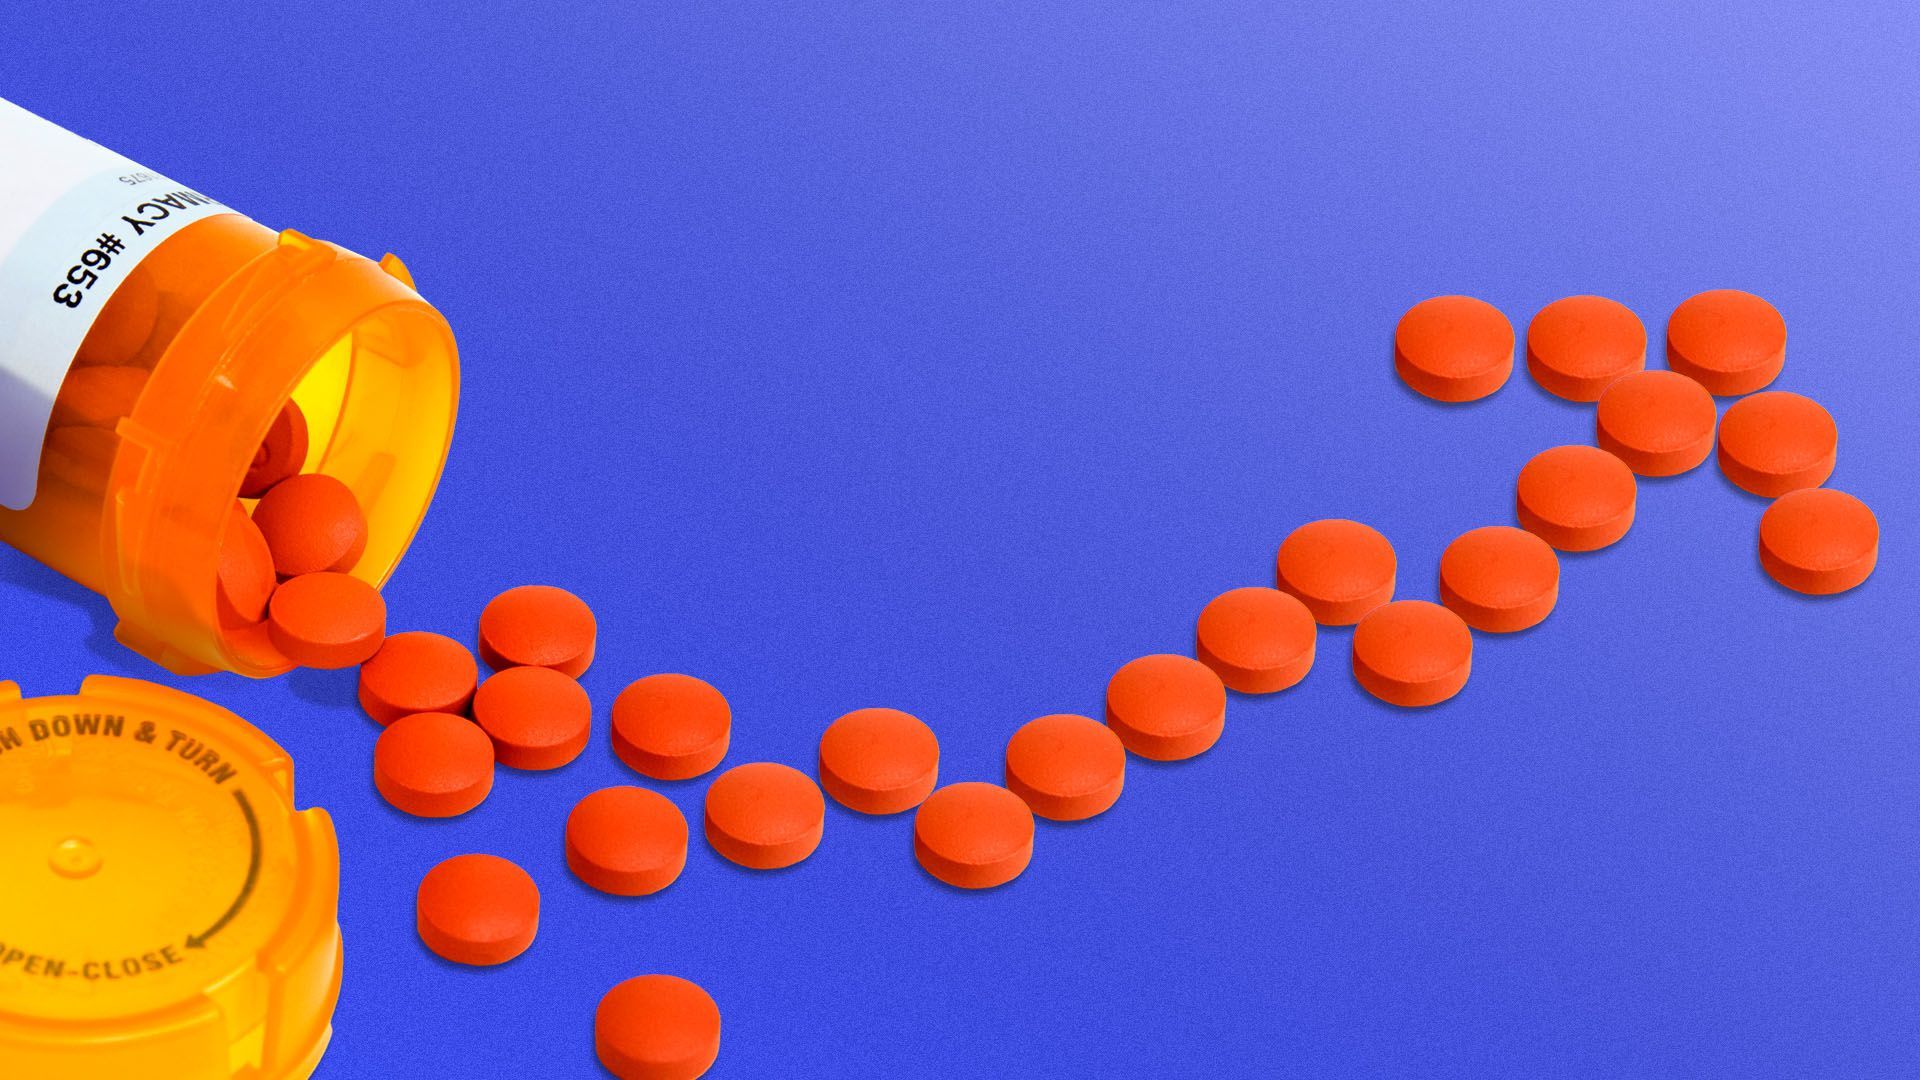 Illustration of a turn over pill bottle the pills forming an upward trending arrow